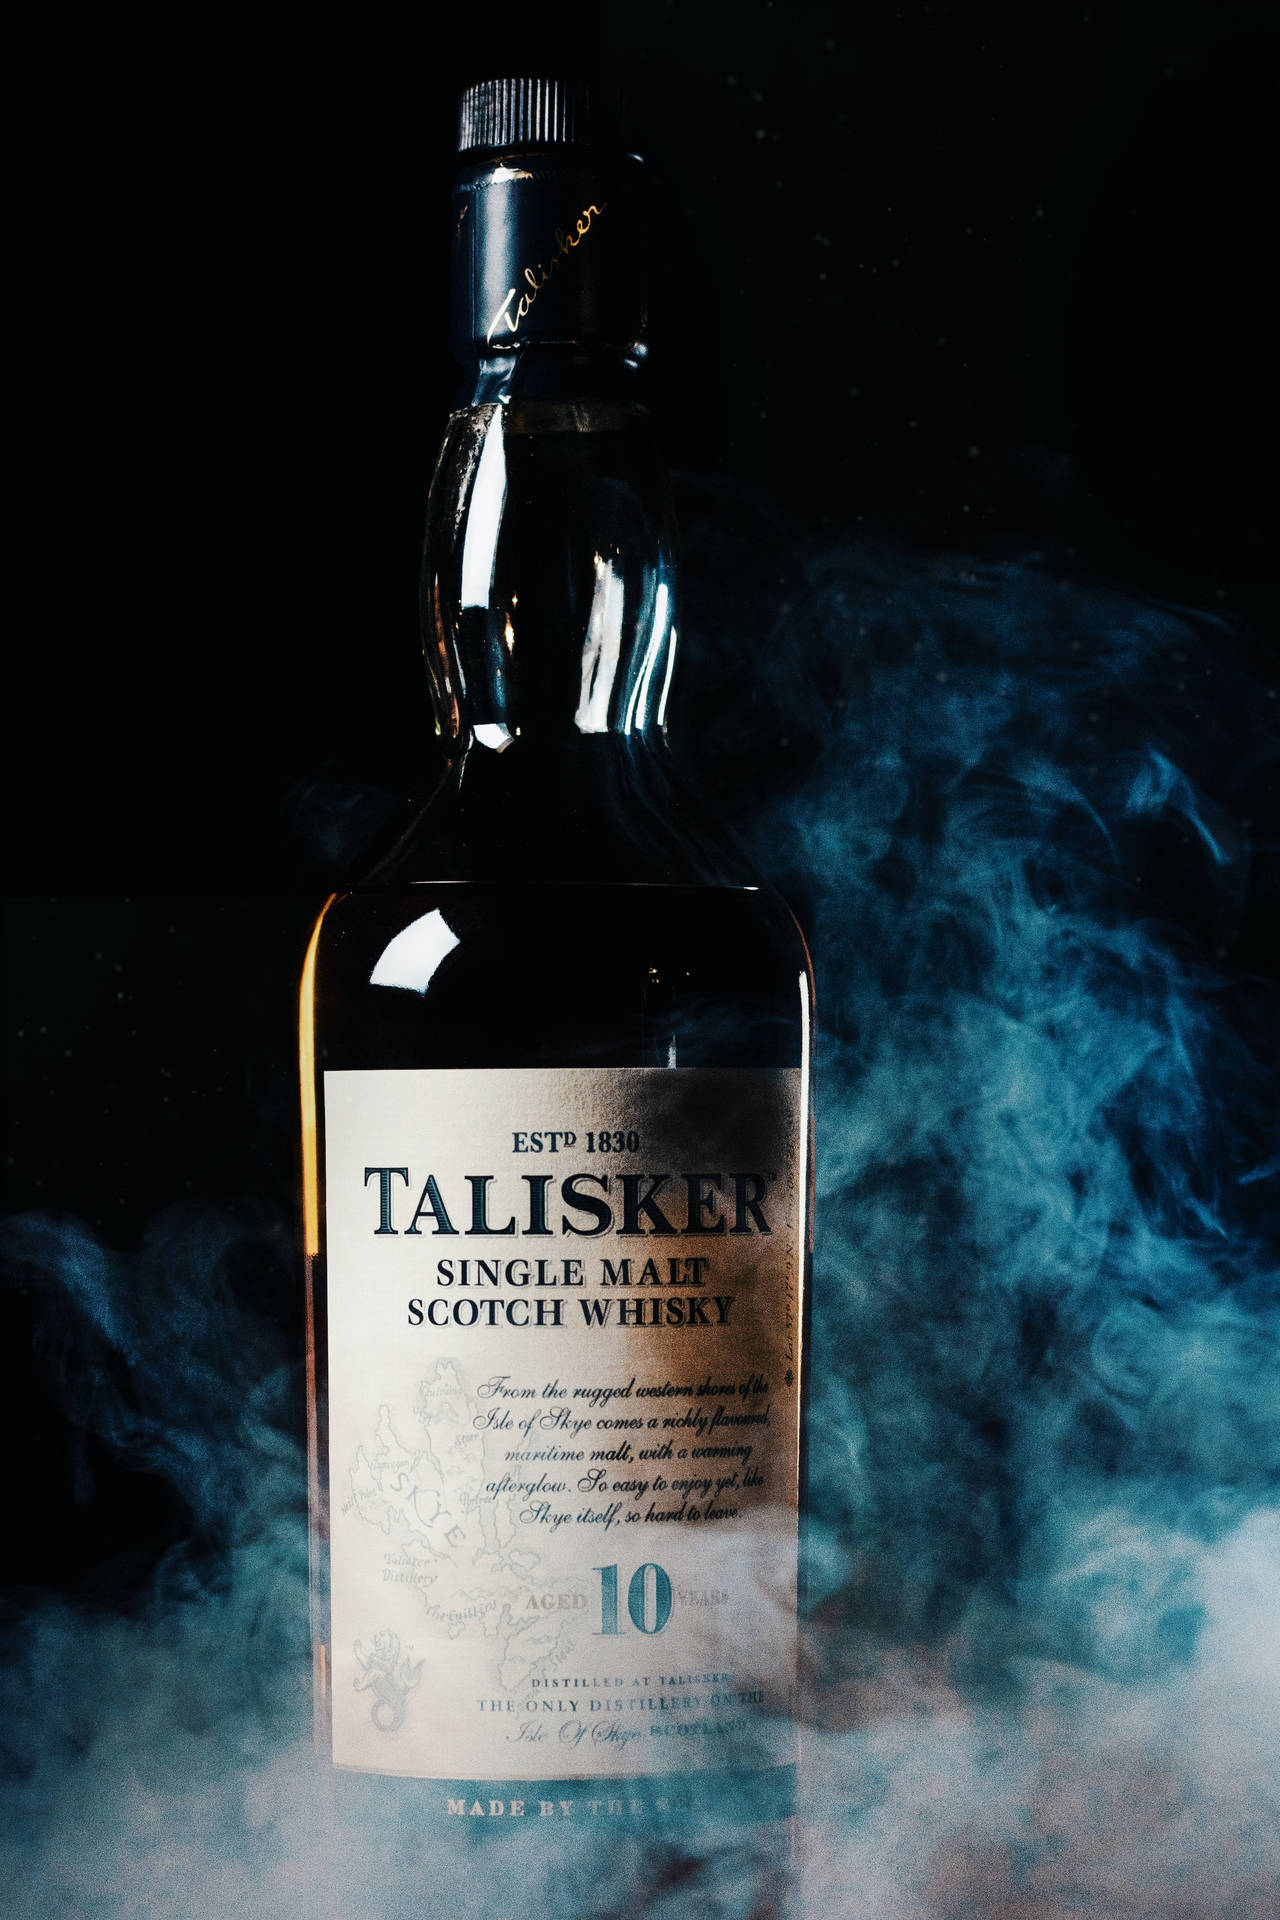 Smokeytalisker Scotch-whiskey-flasche Wallpaper